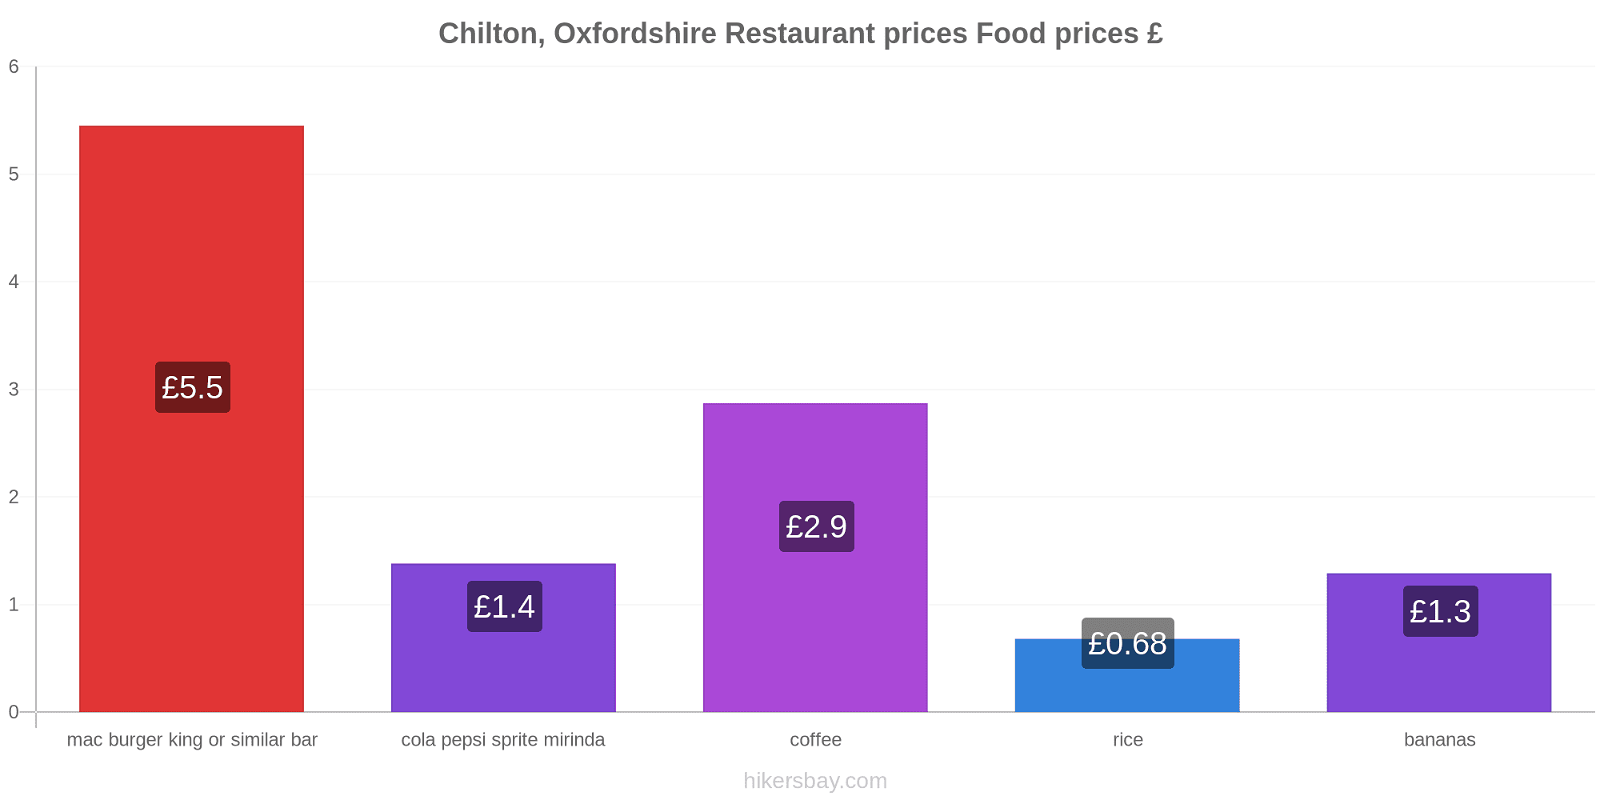 Chilton, Oxfordshire price changes hikersbay.com